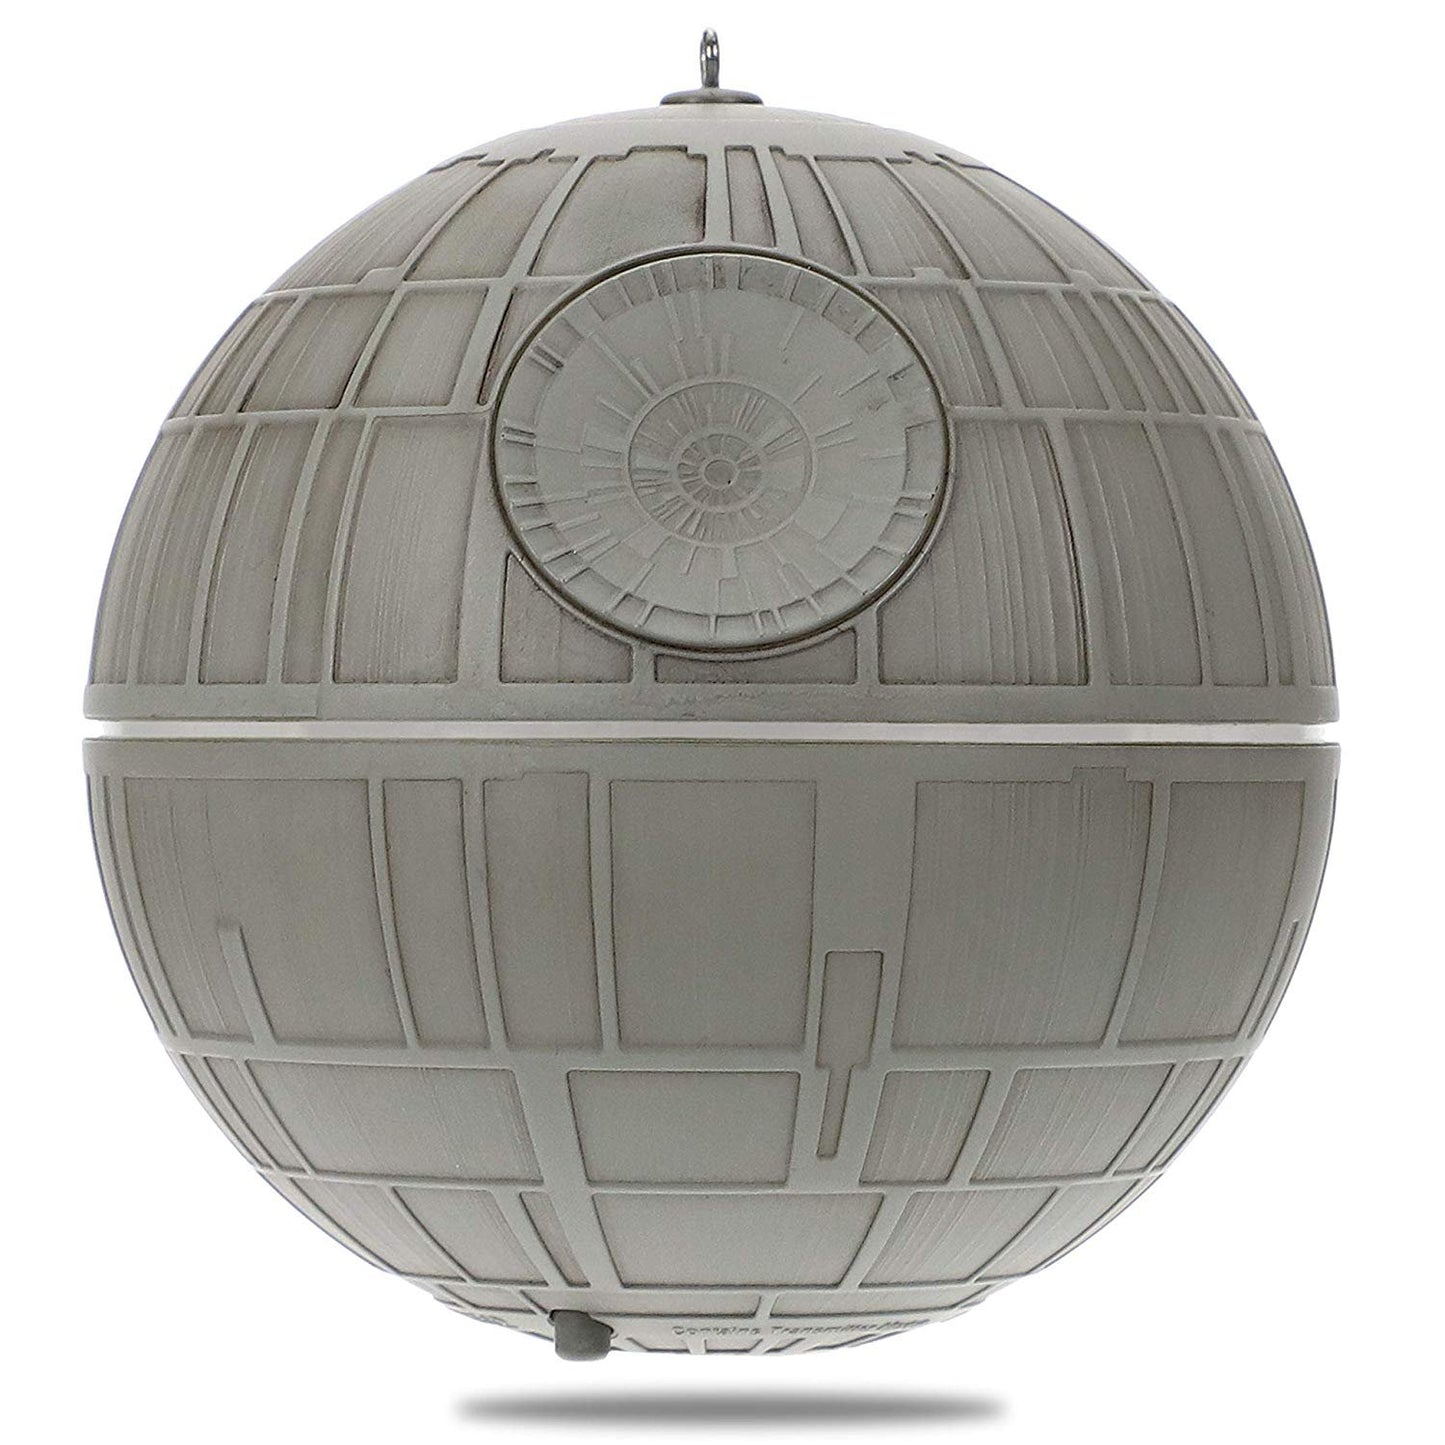 Hallmark Star Wars Death Star Ornament with Light and Sound Sci-Fi,Movies & TV